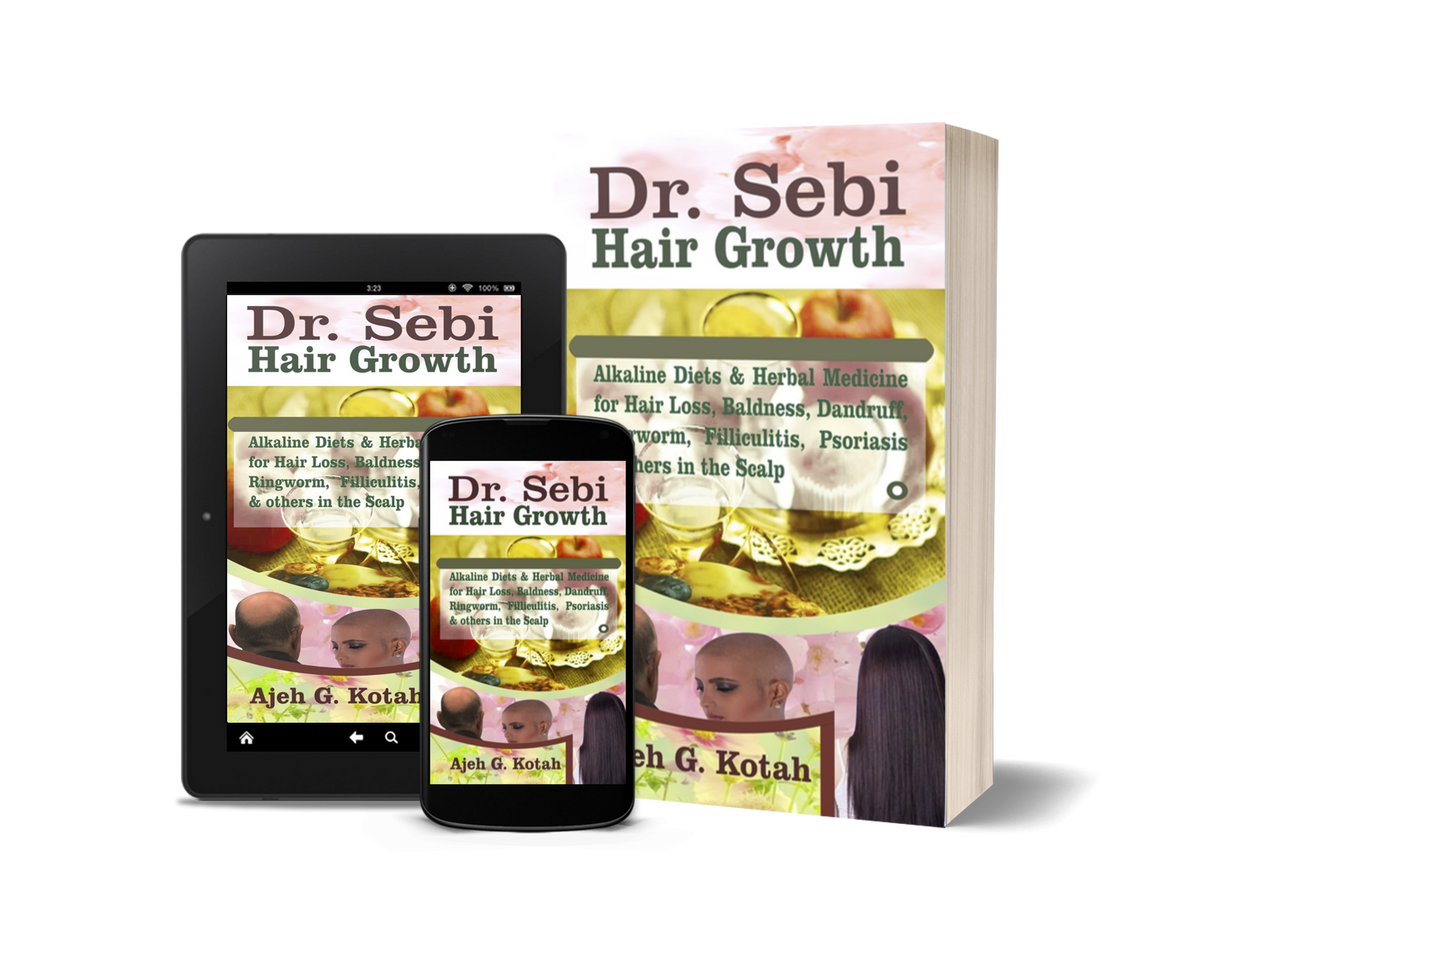 The Dr. Sebi Guide For Health and Wellness Bundle